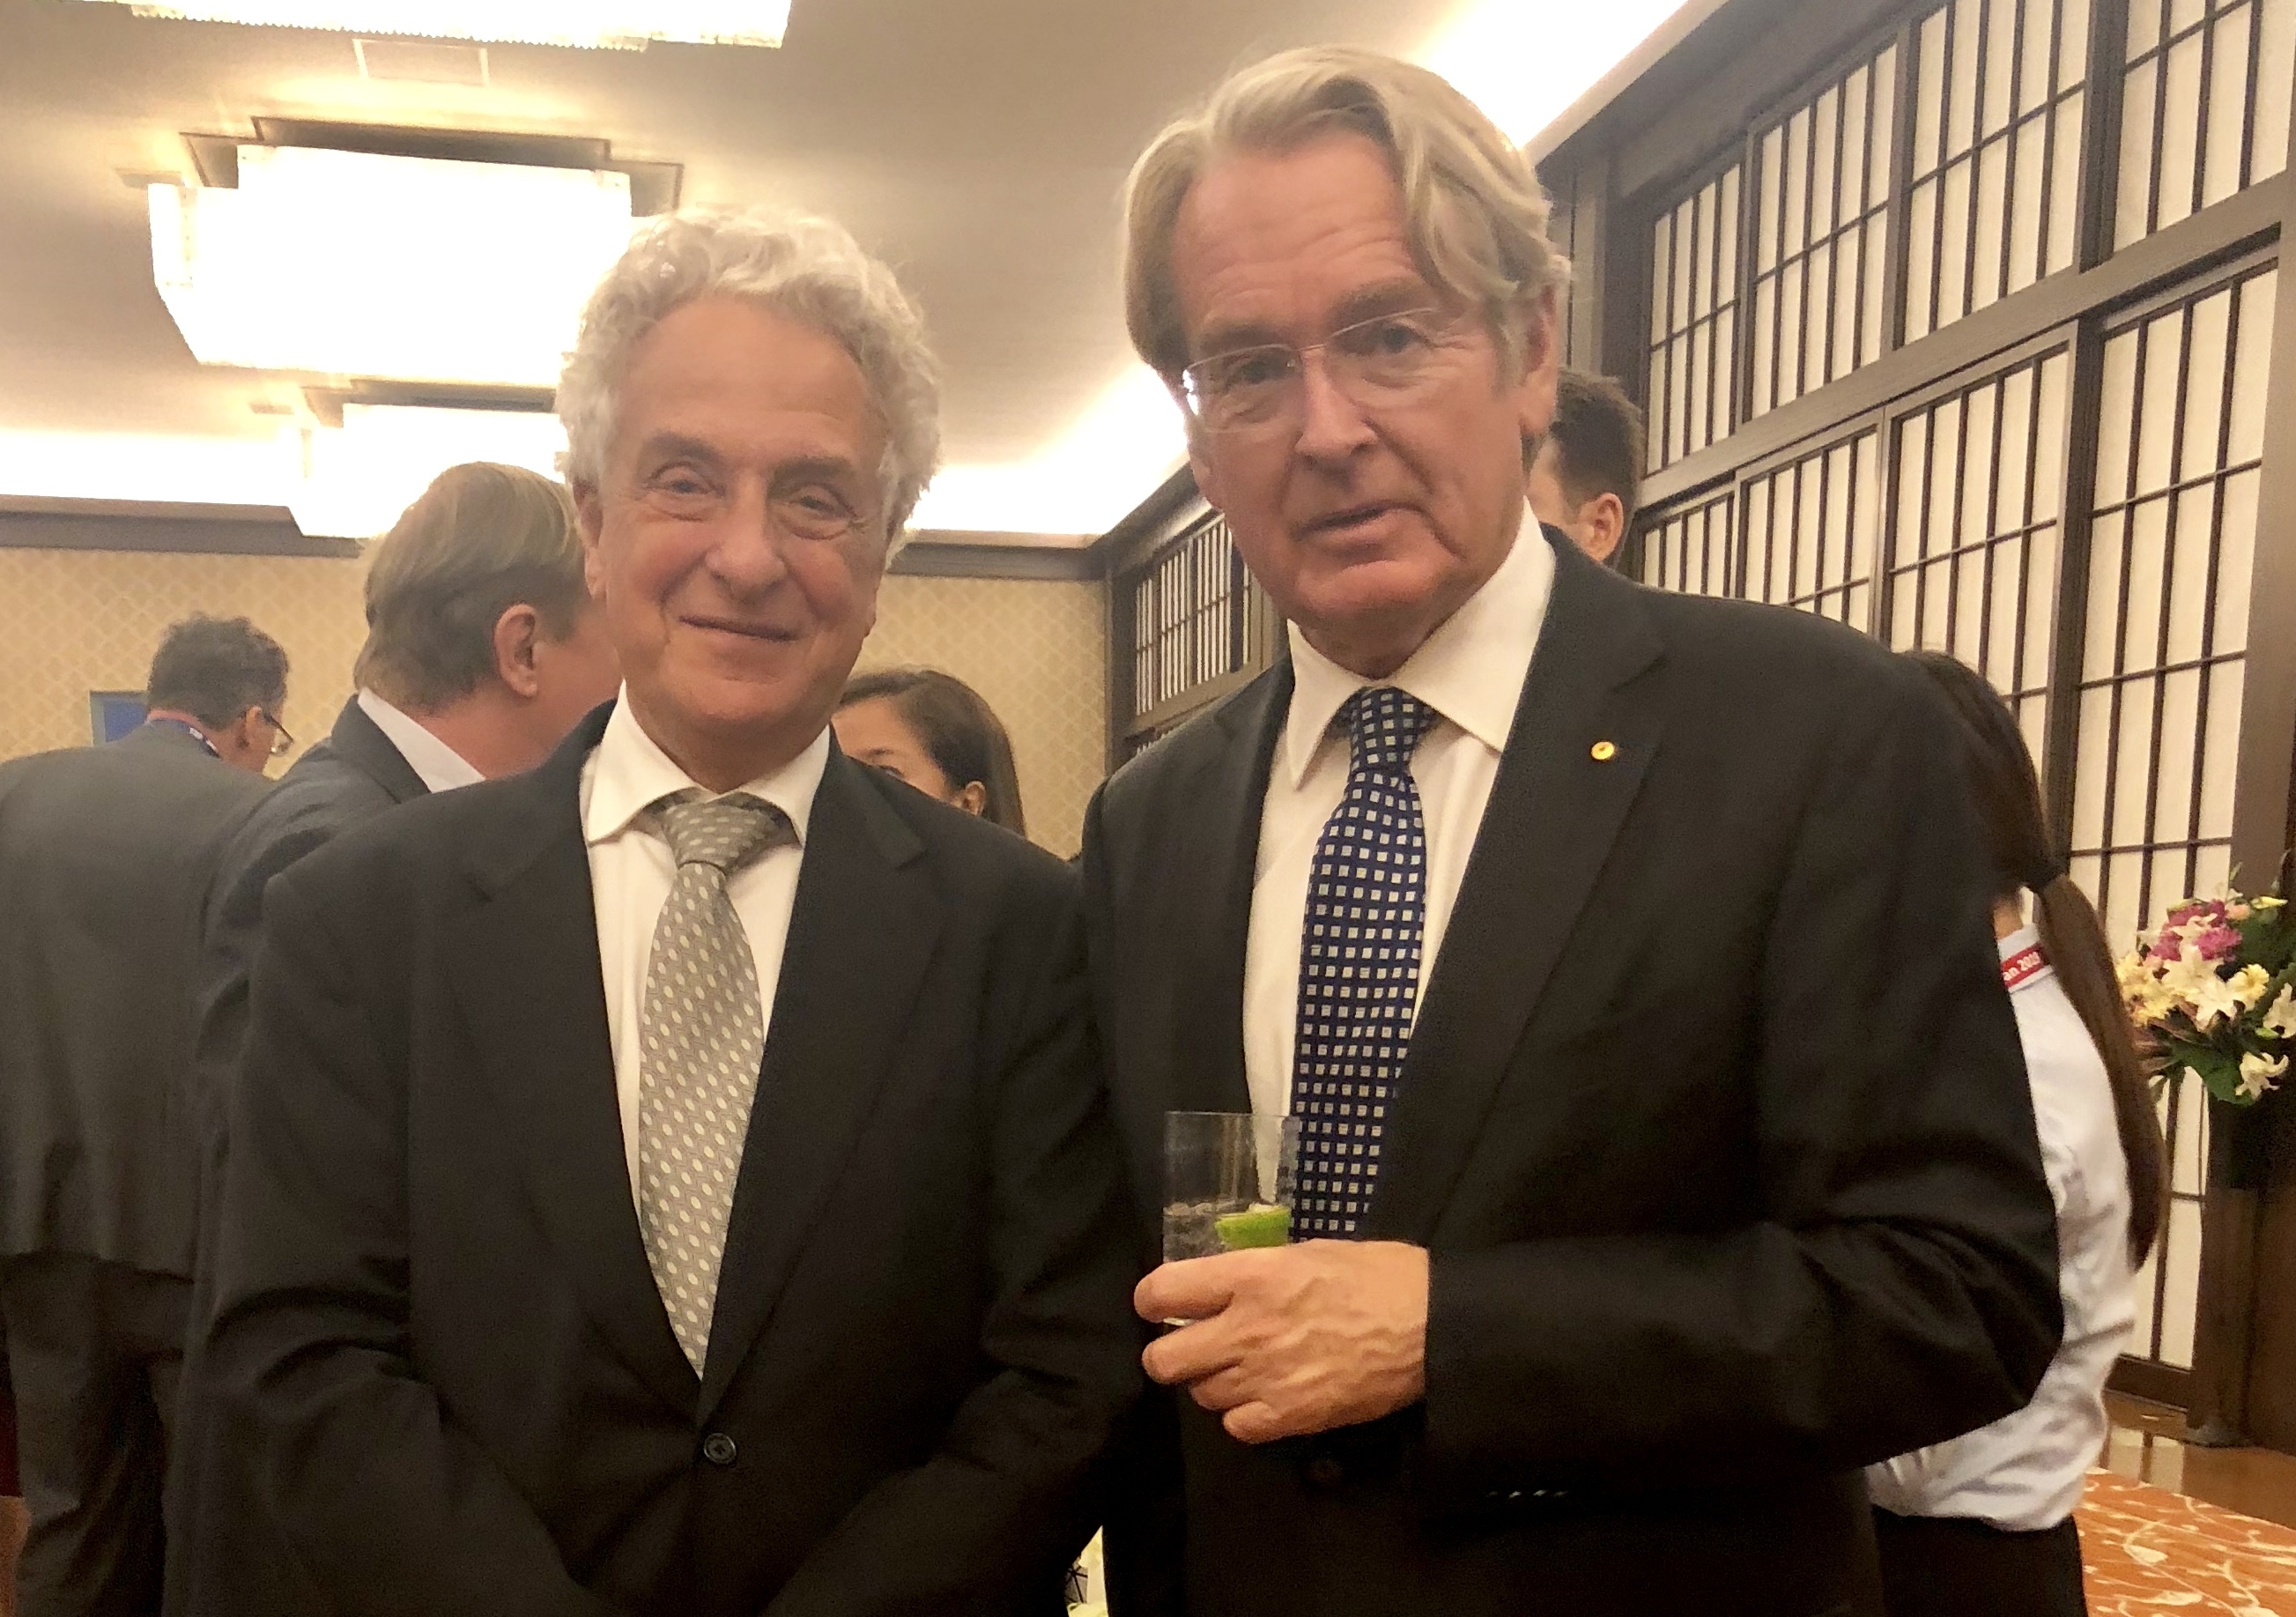 UNSW Business School’s Professor John Piggott (left) with Australian Ambassador to Japan, Richard Court, at a T20 reception on 4 December 2018.